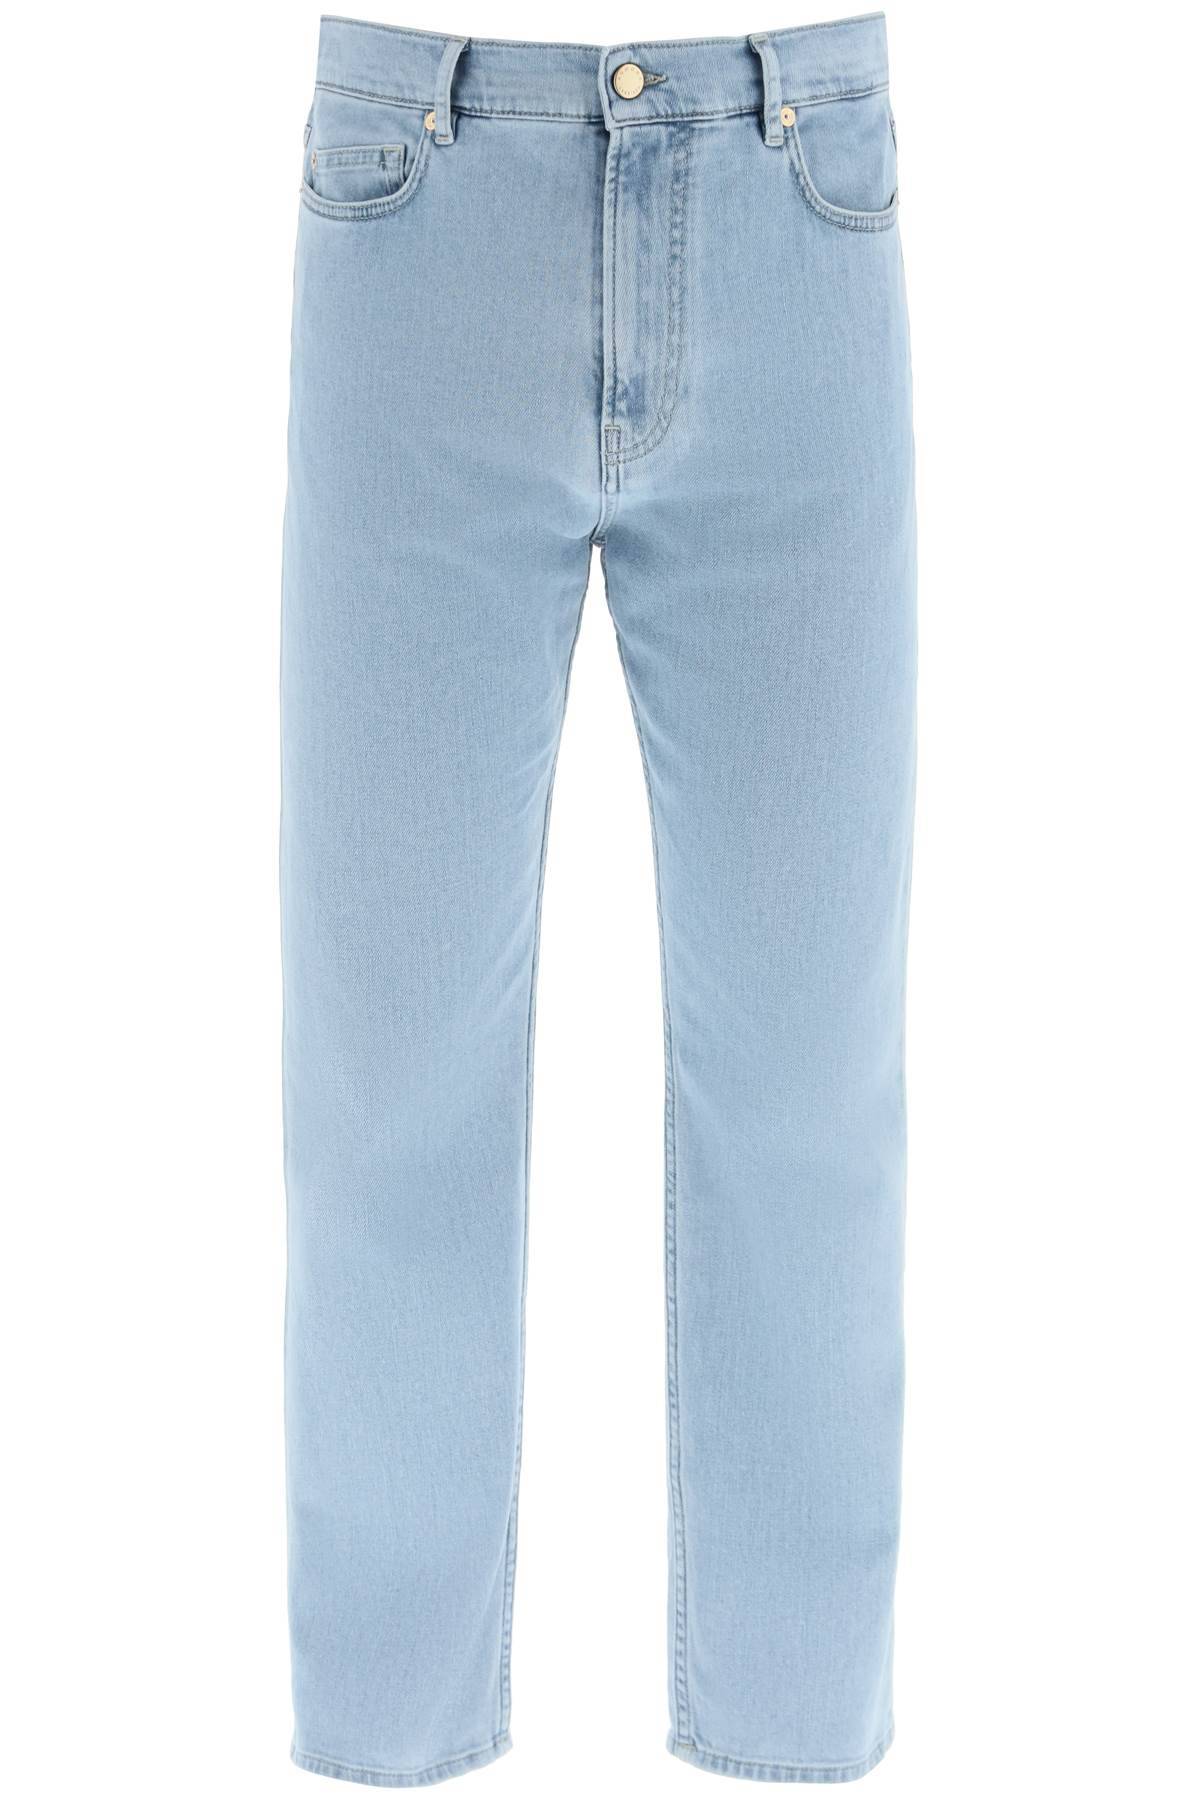 AGNONA AGNONA five-pocket soft denim jeans